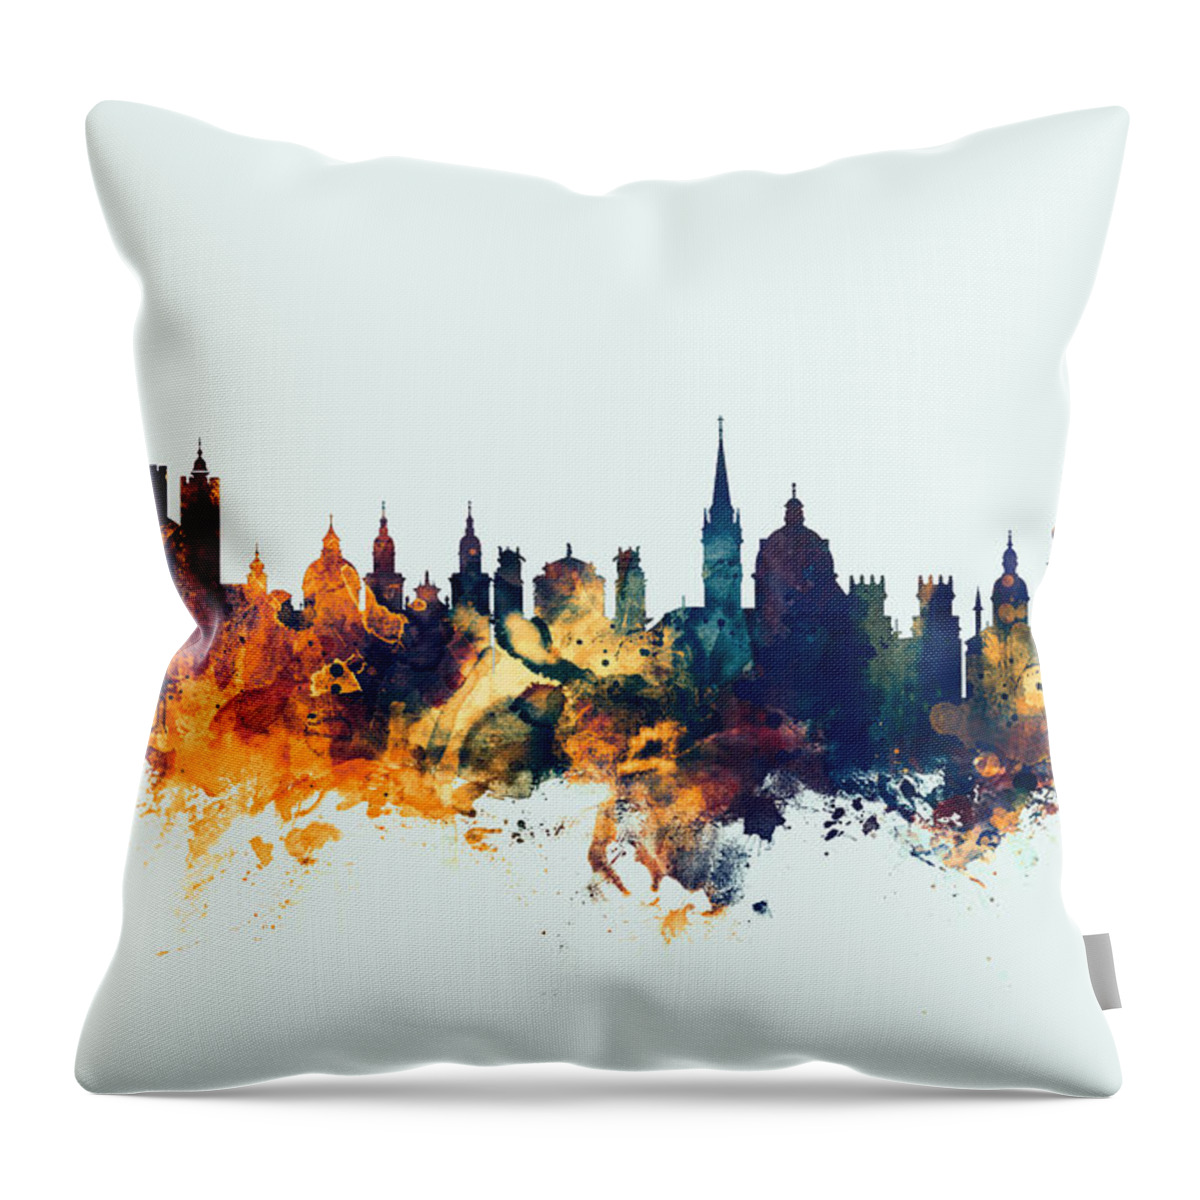 Salzburg Throw Pillow featuring the digital art Salzburg Austria Skyline by Michael Tompsett